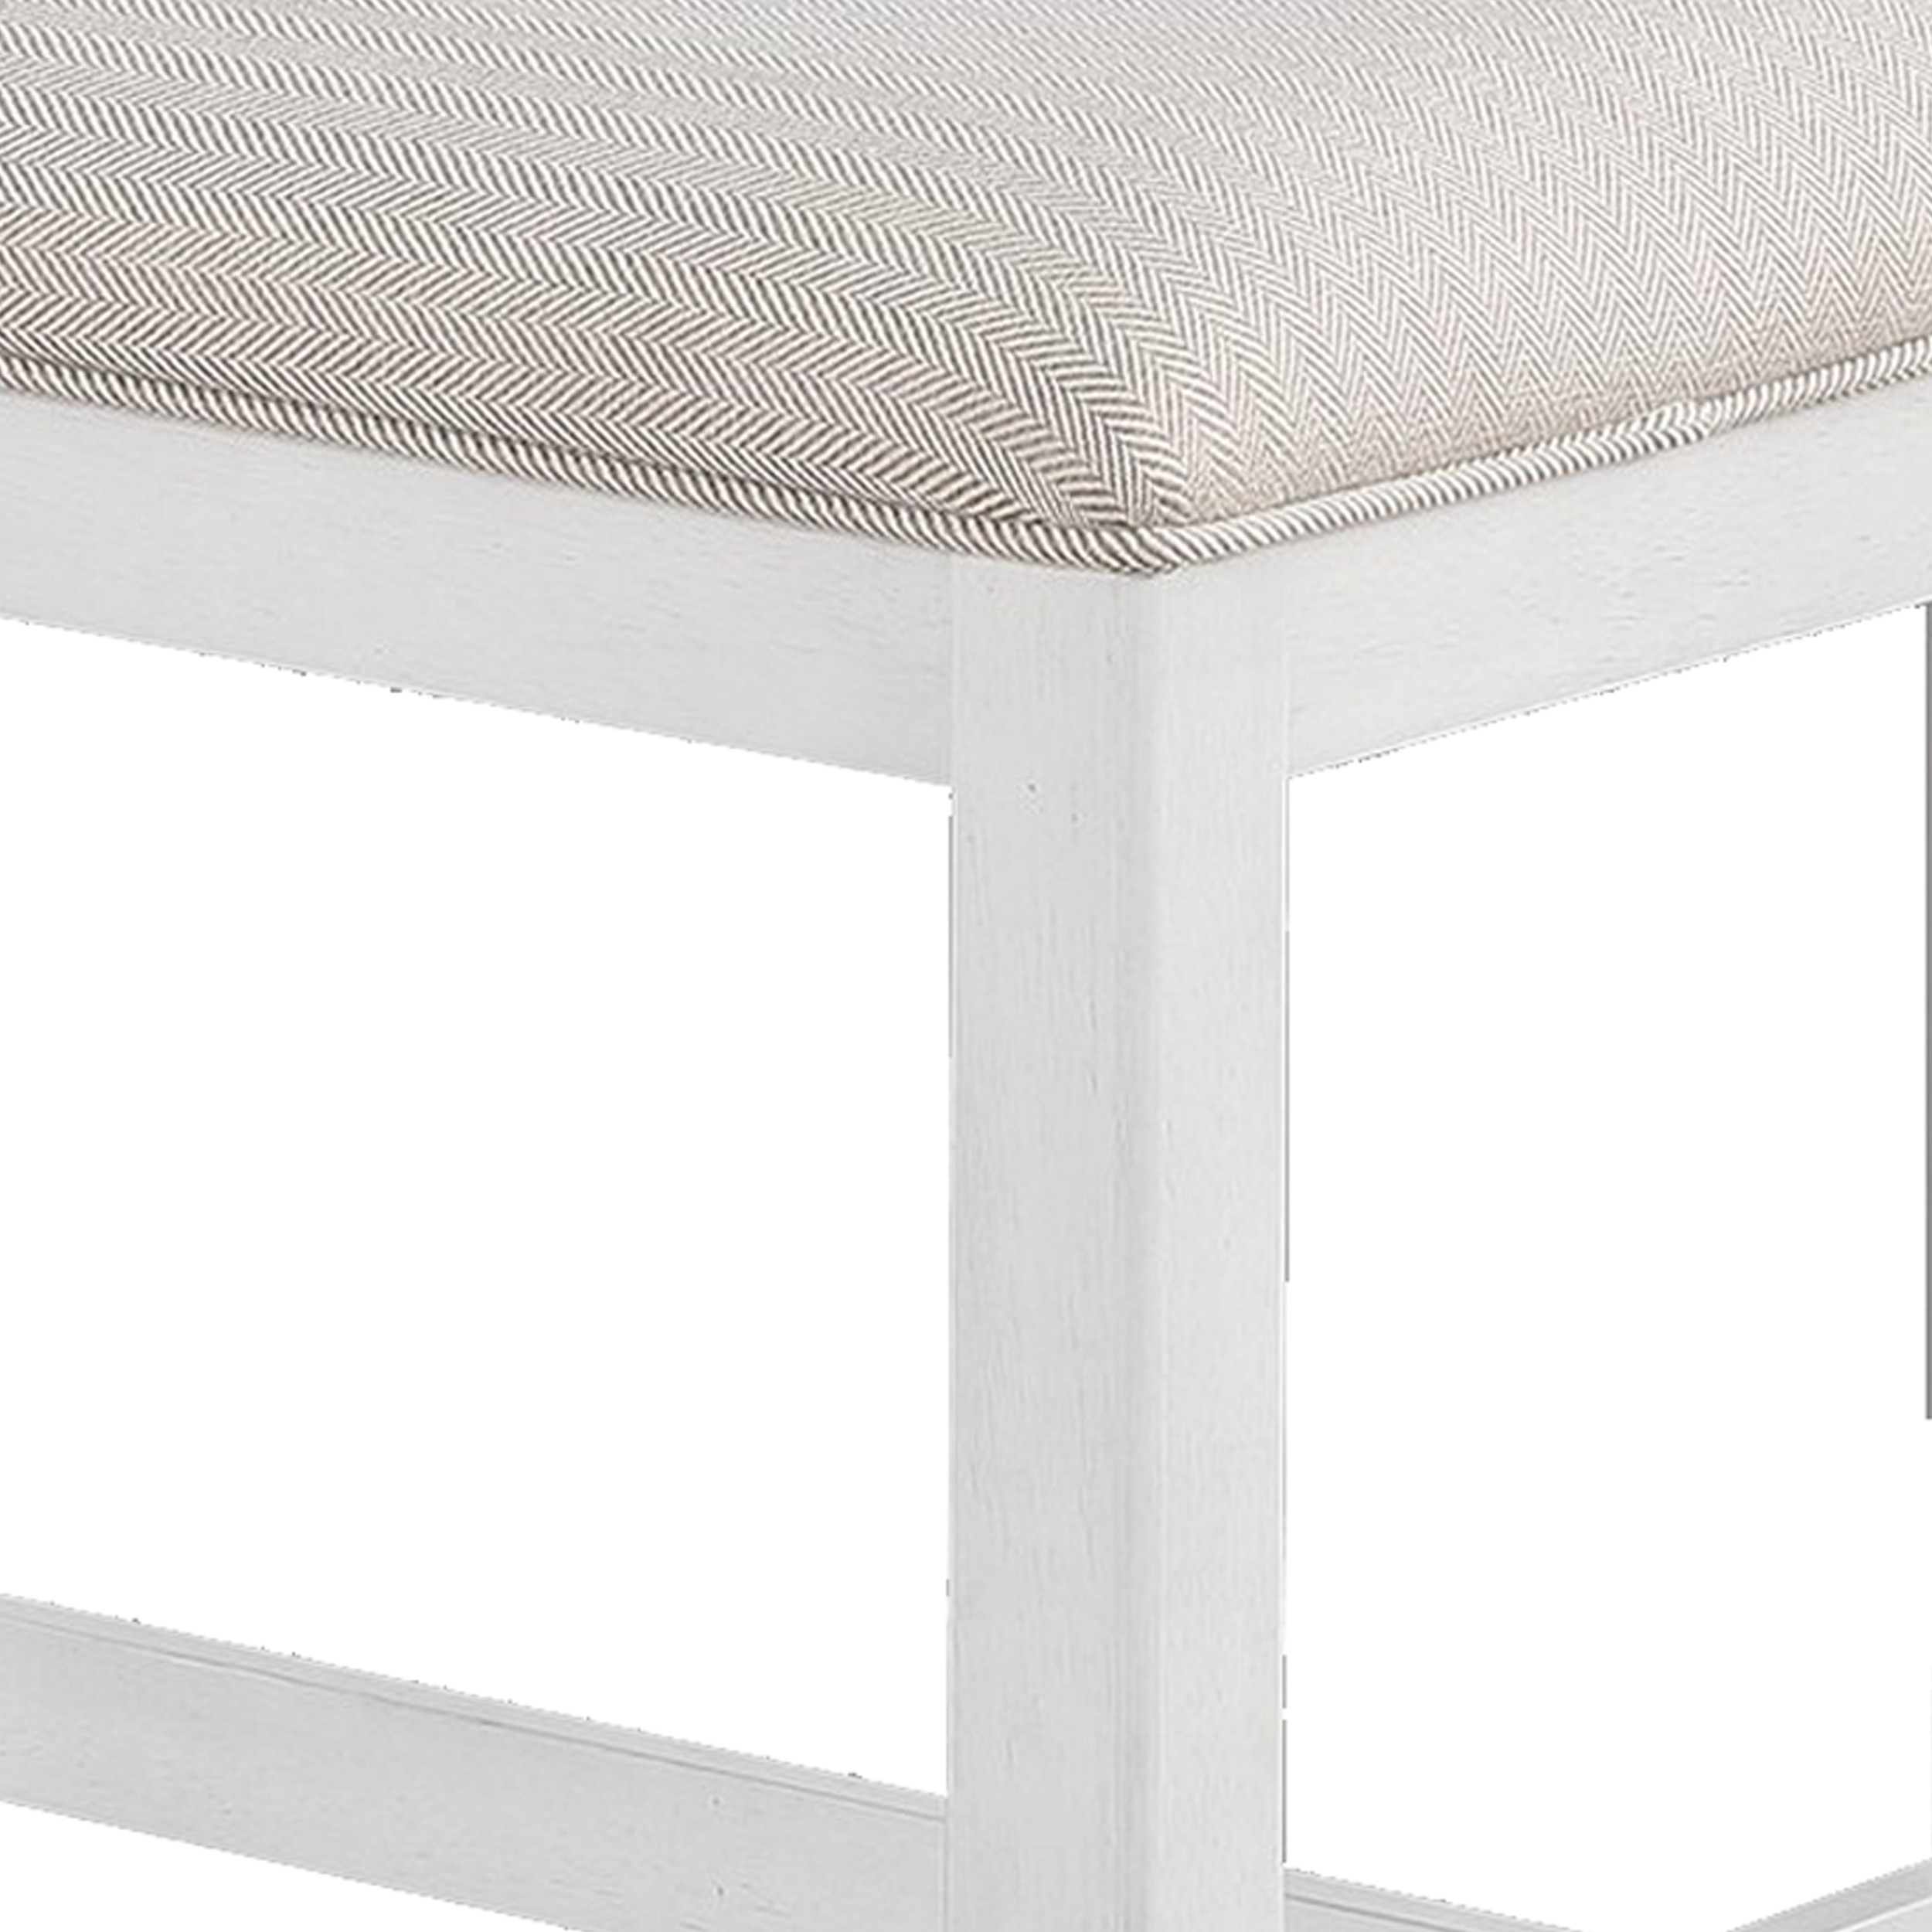 Kith 42 Inch Counter Height Dining Bench, Seat Cushion, Beige Fabric, White- Saltoro Sherpi